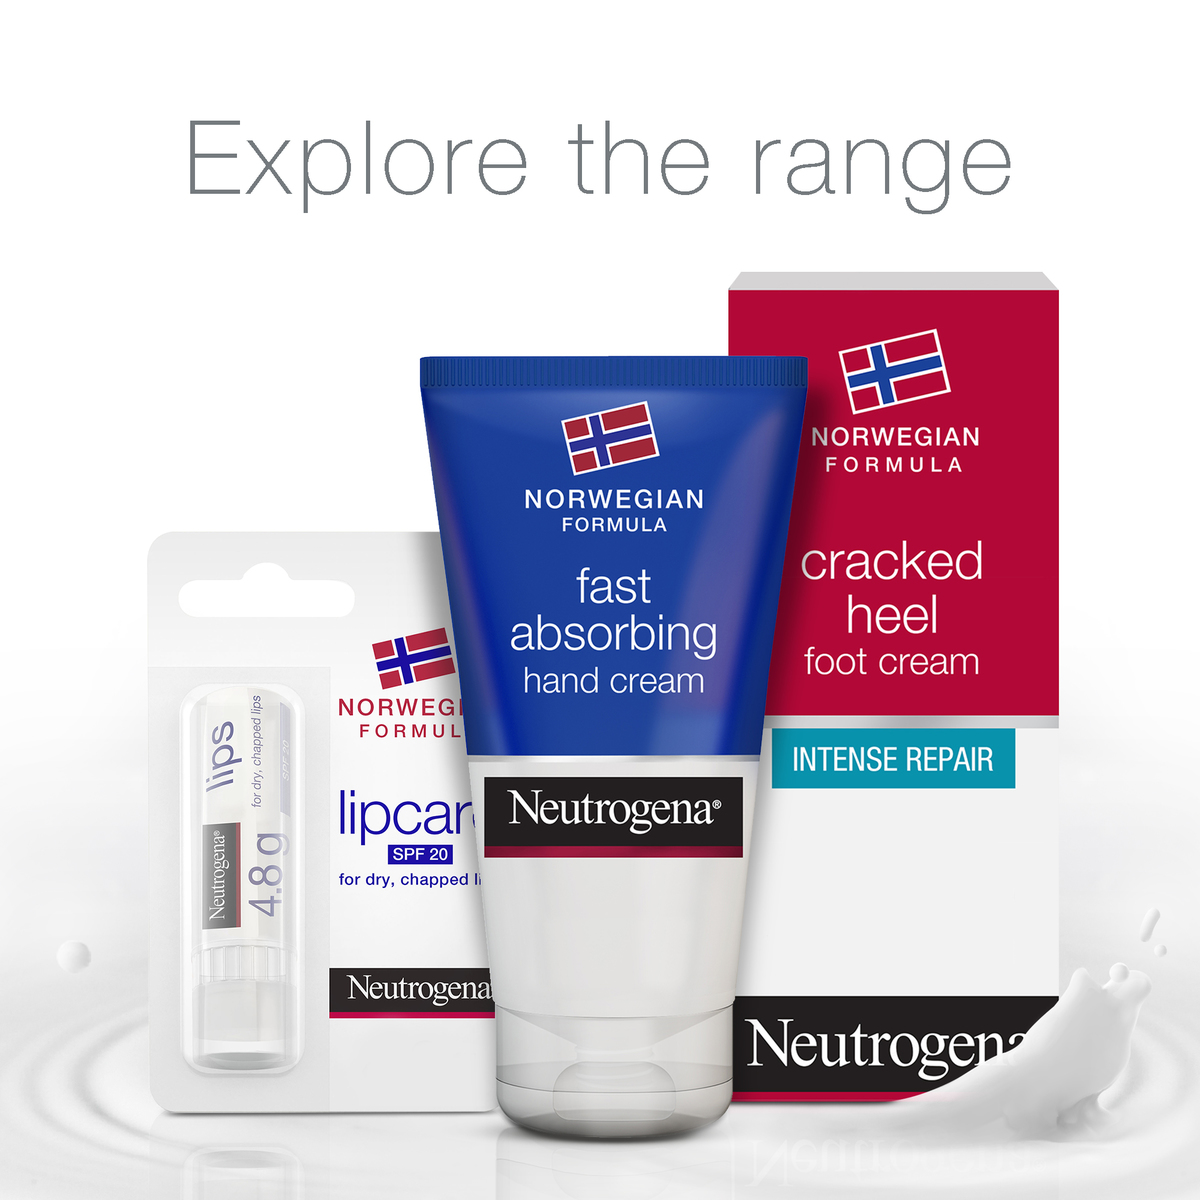 Neutrogena Foot Cream Norwegian Formula Nourishing Dry & Damaged Feet 50 ml